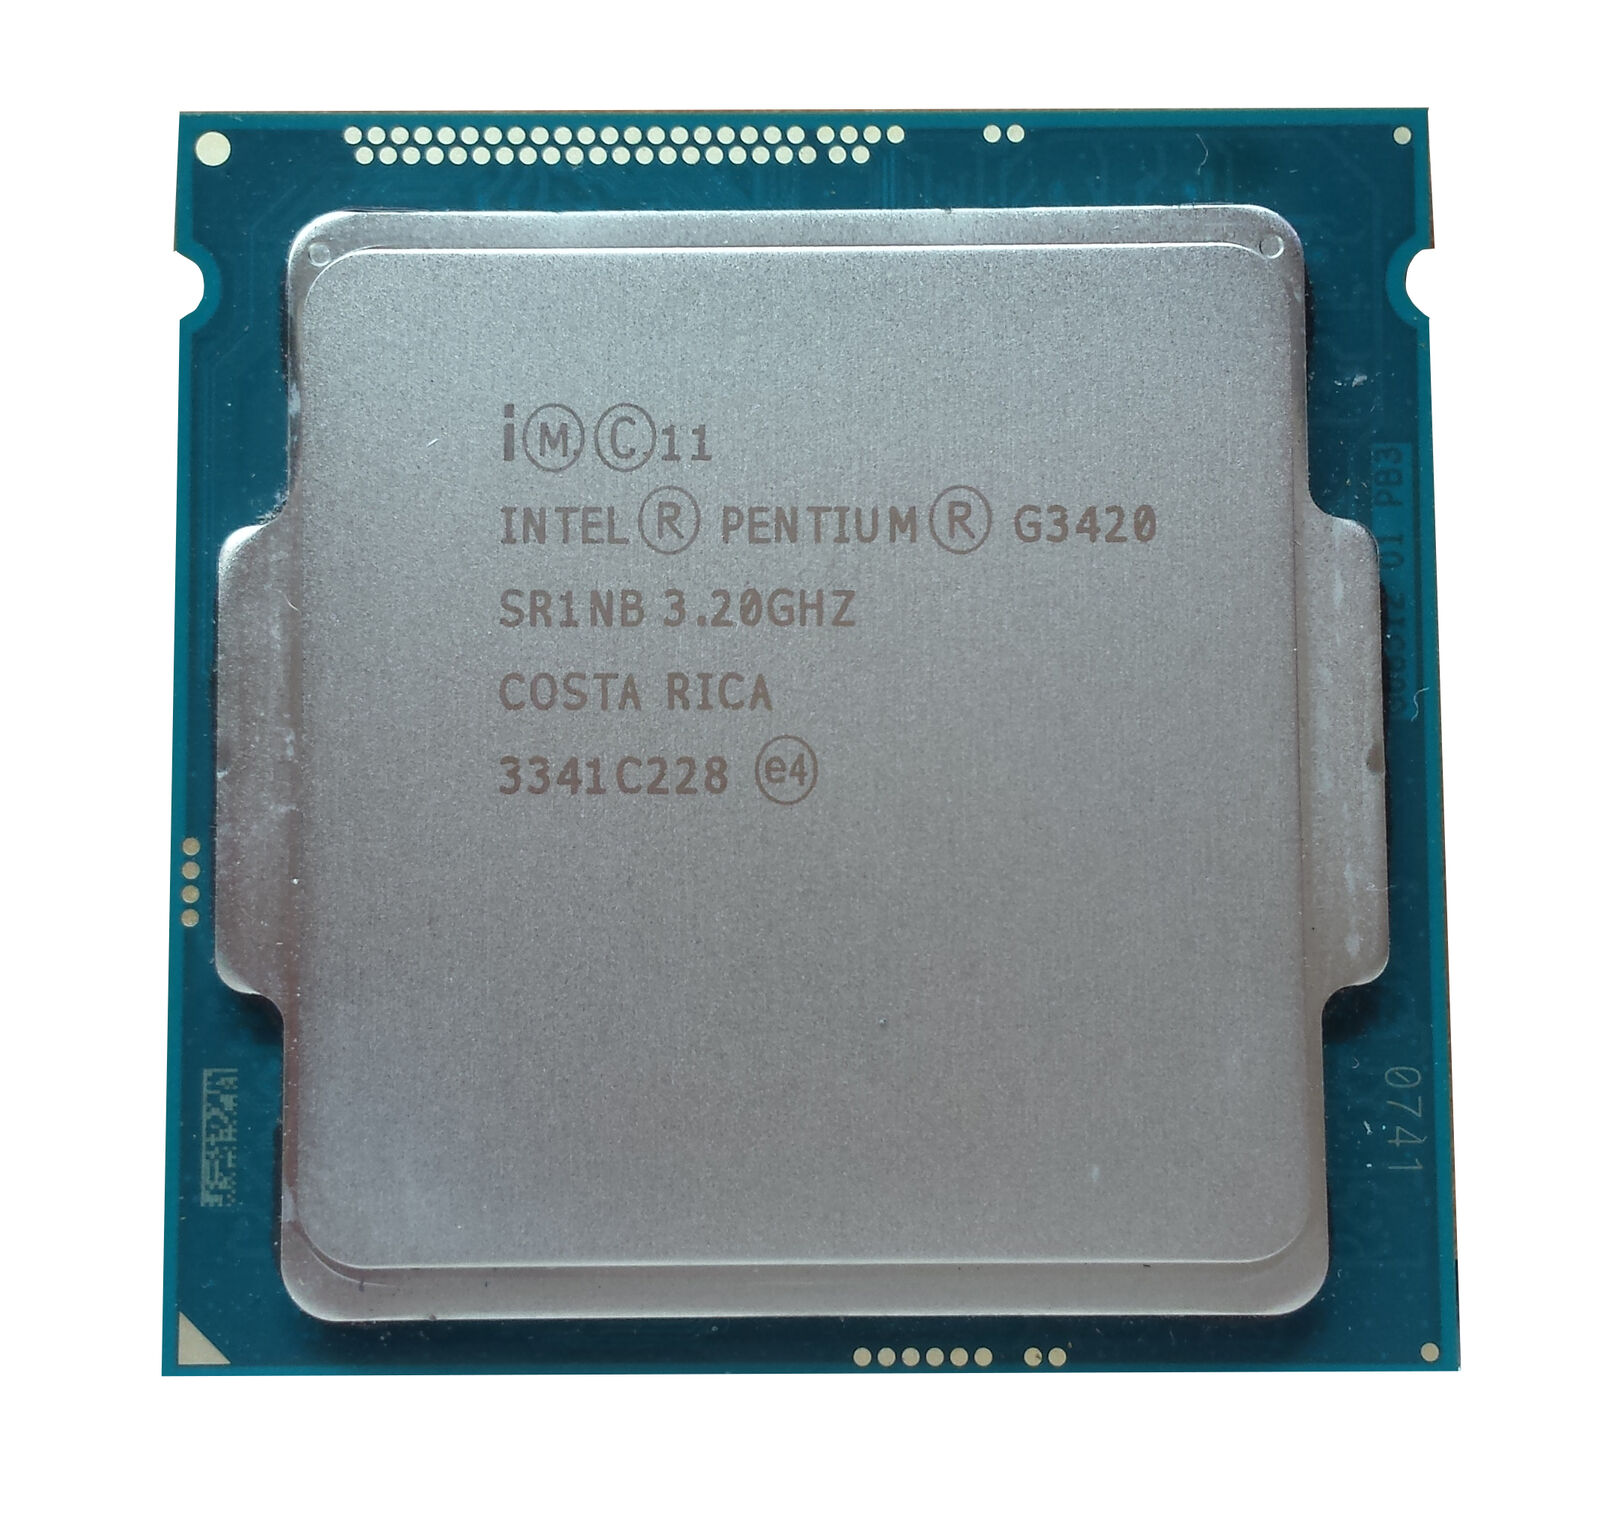 Intel Pentium G3420 3.2 GHz 5GT/s LGA 1150 Desktop CPU Processor SR1NB